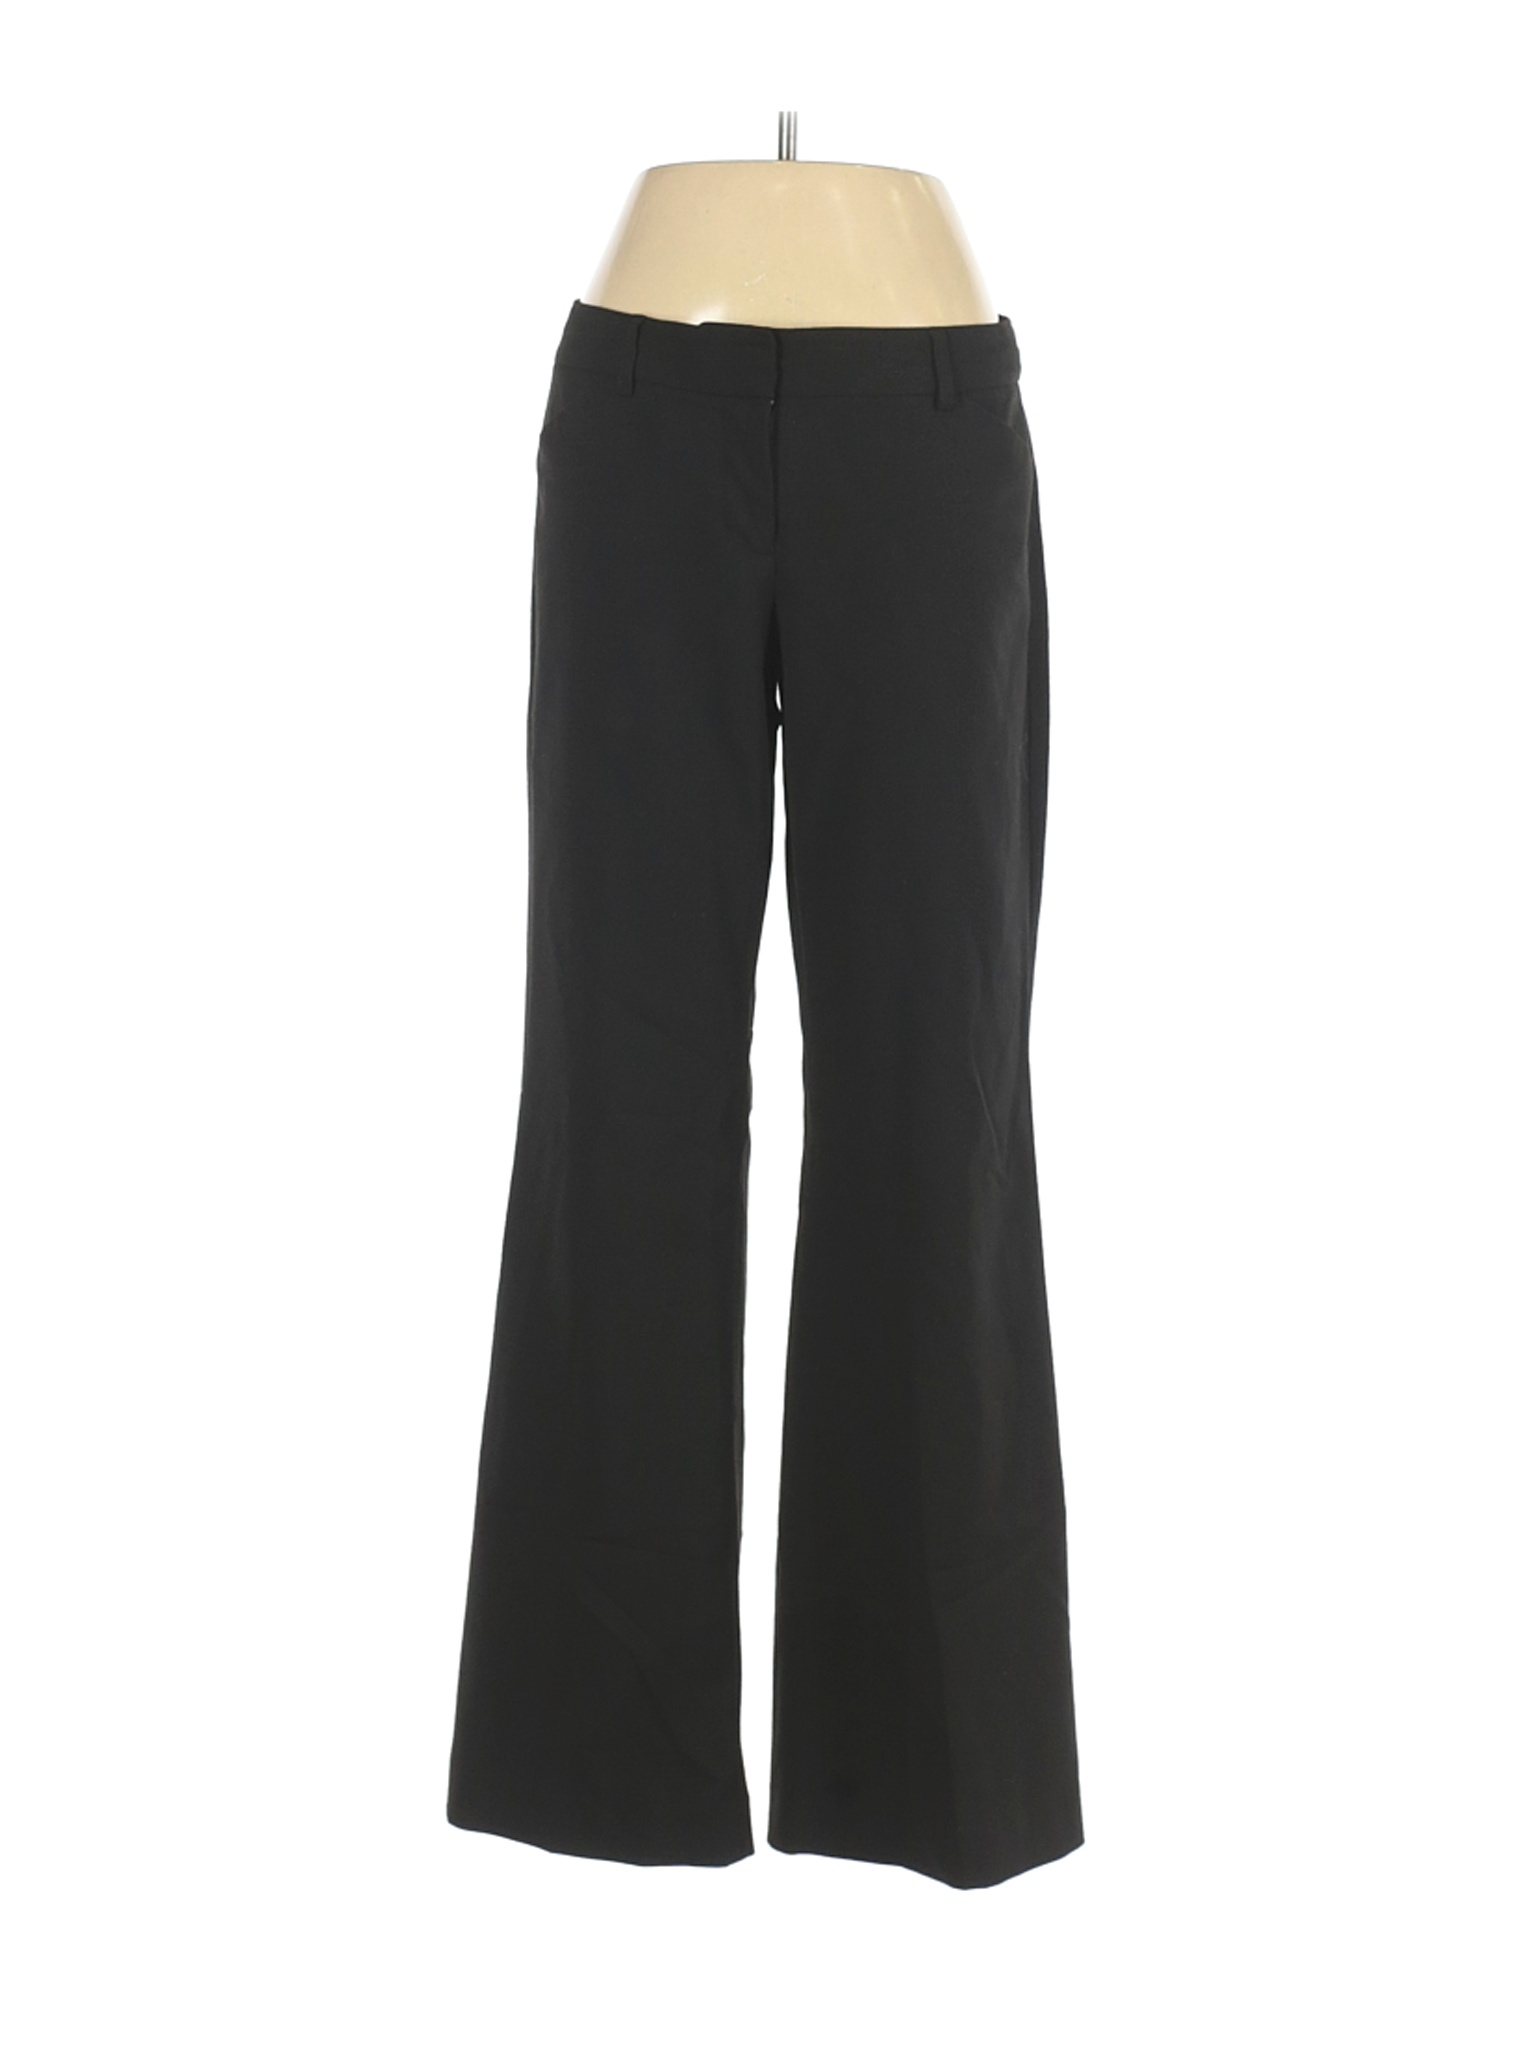 Express Design Studio Women Black Dress Pants 4 | eBay